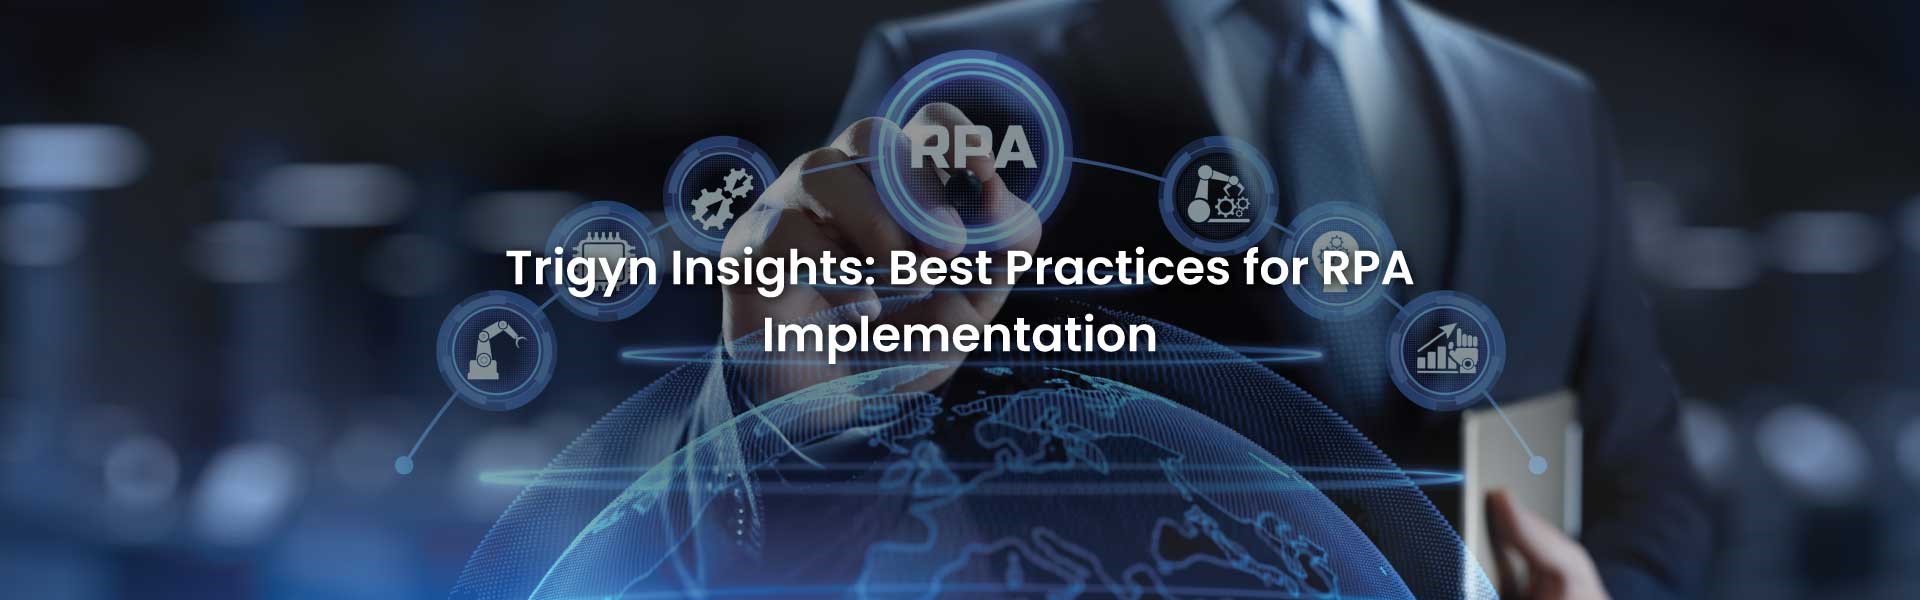 RPA Implementation Best Practices